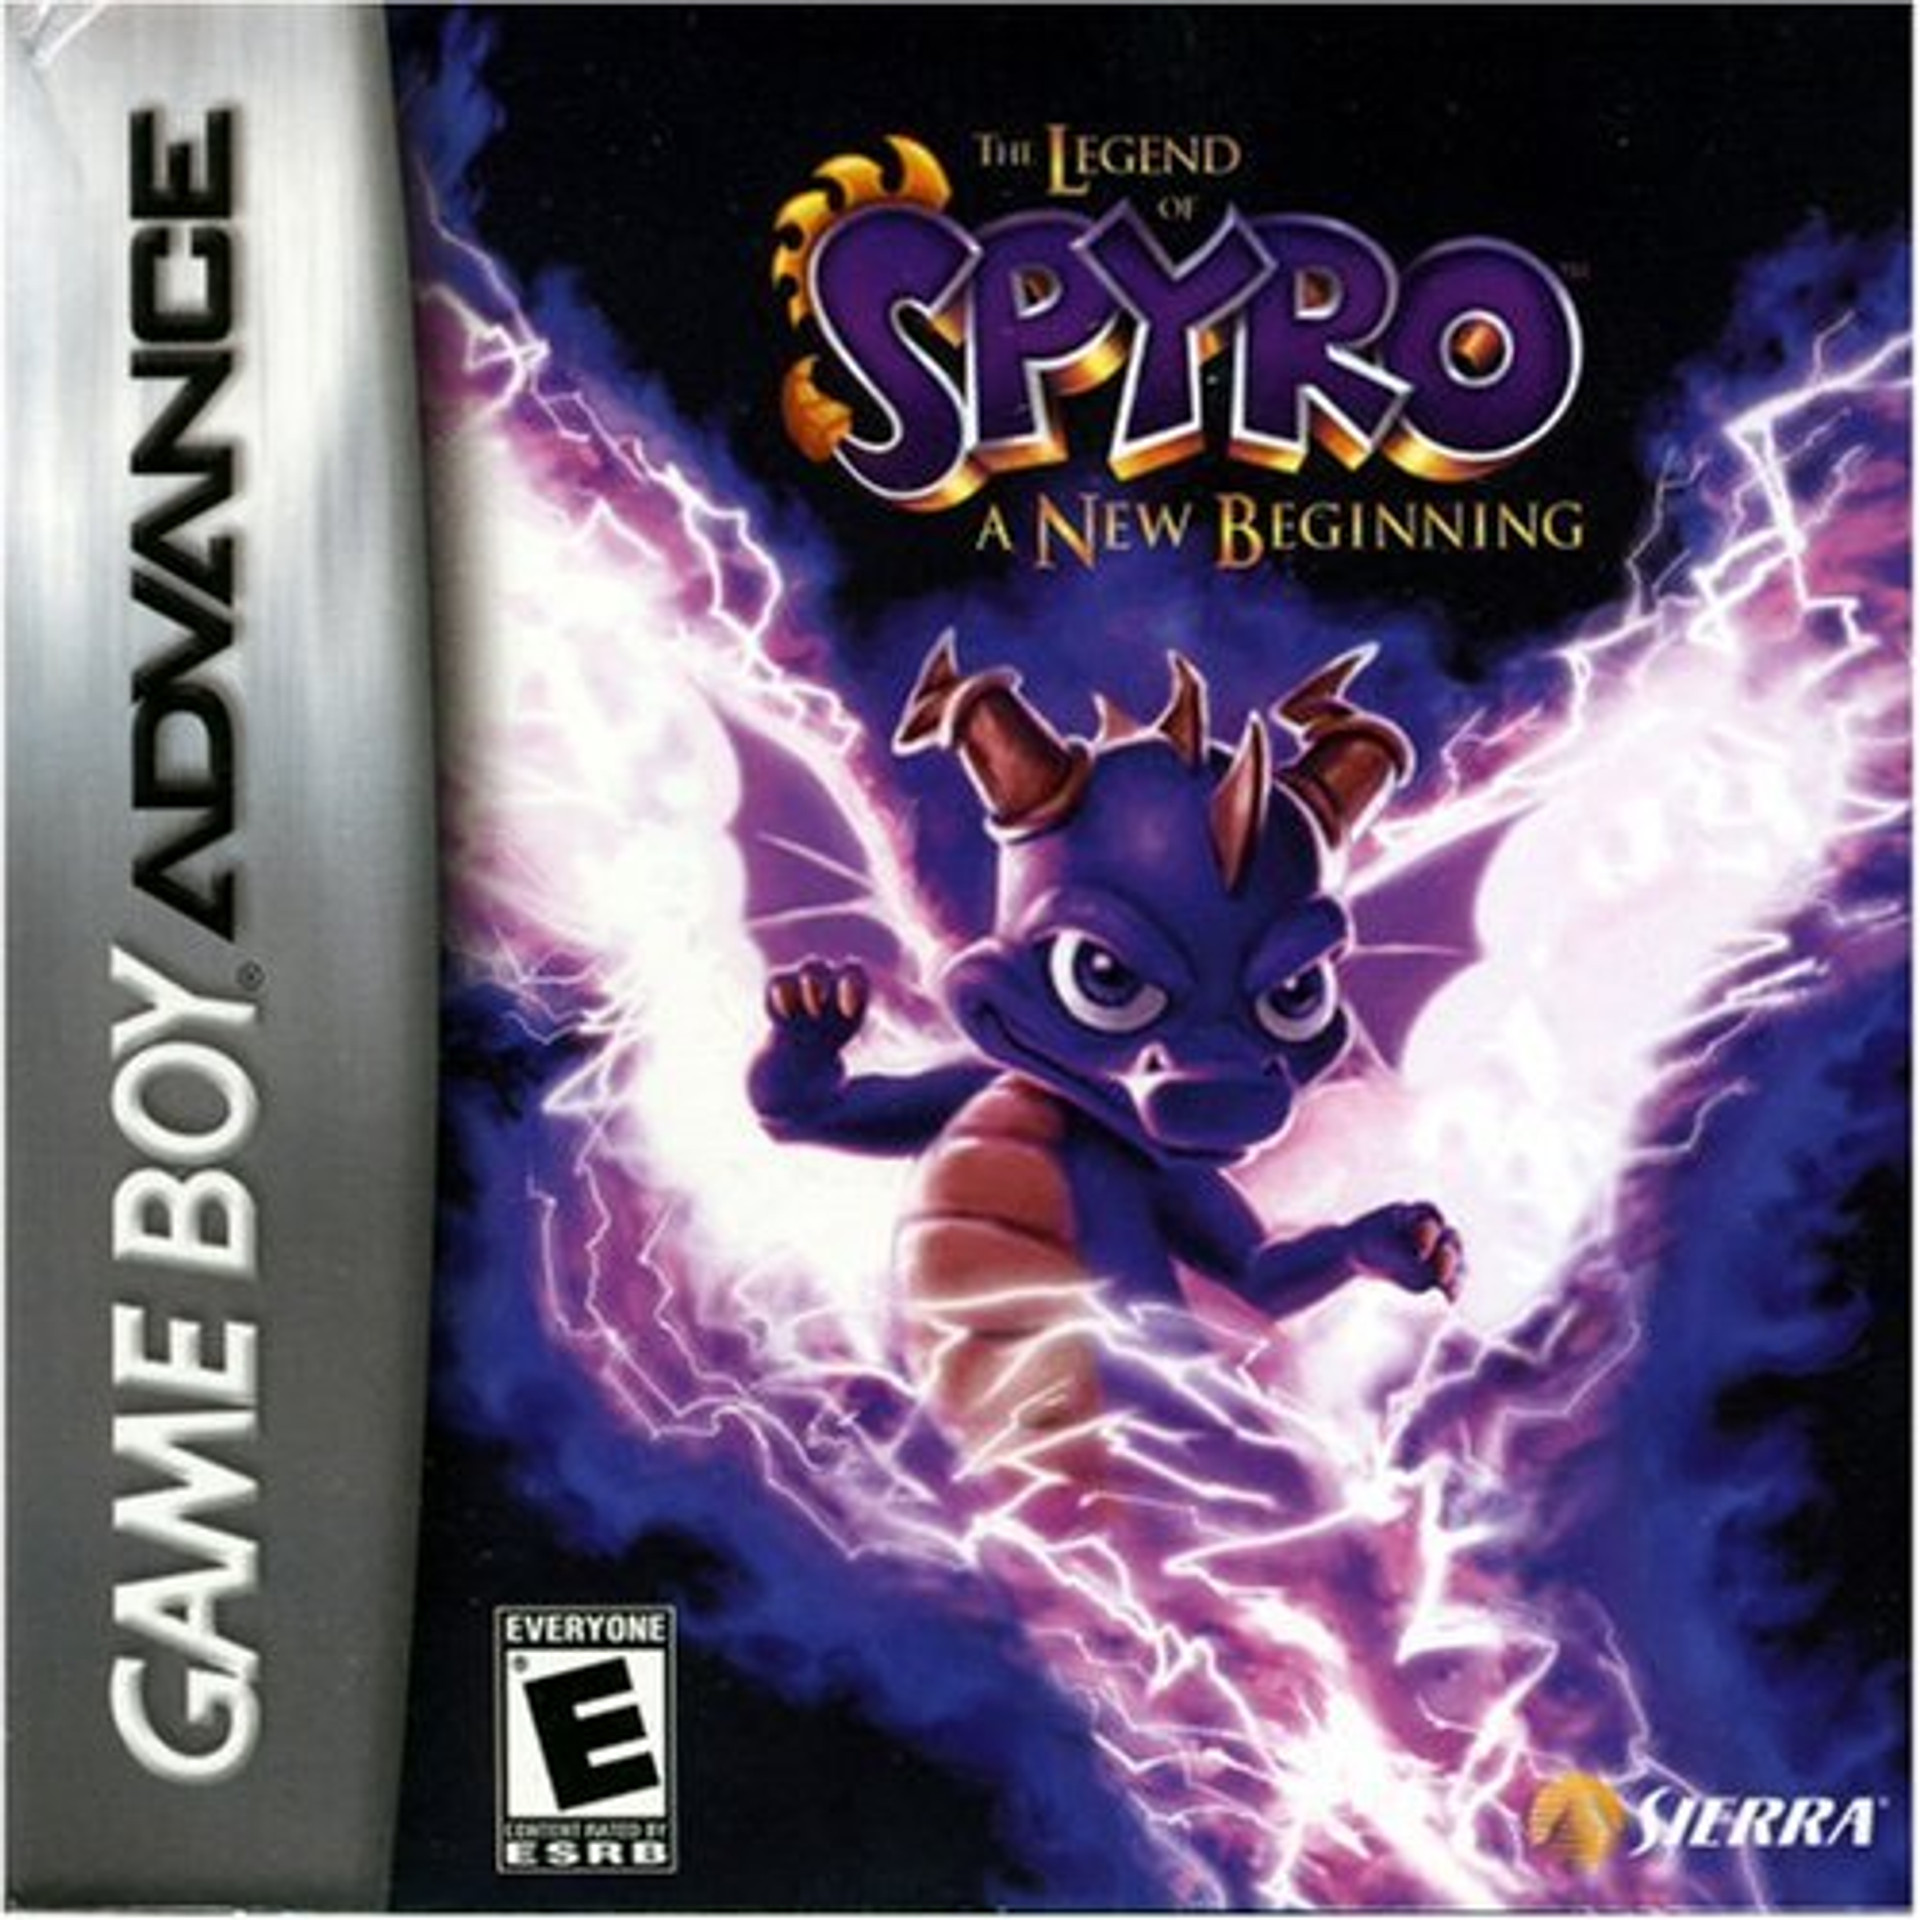 Gameboy Advance game cartridge Spyro the Dragon images